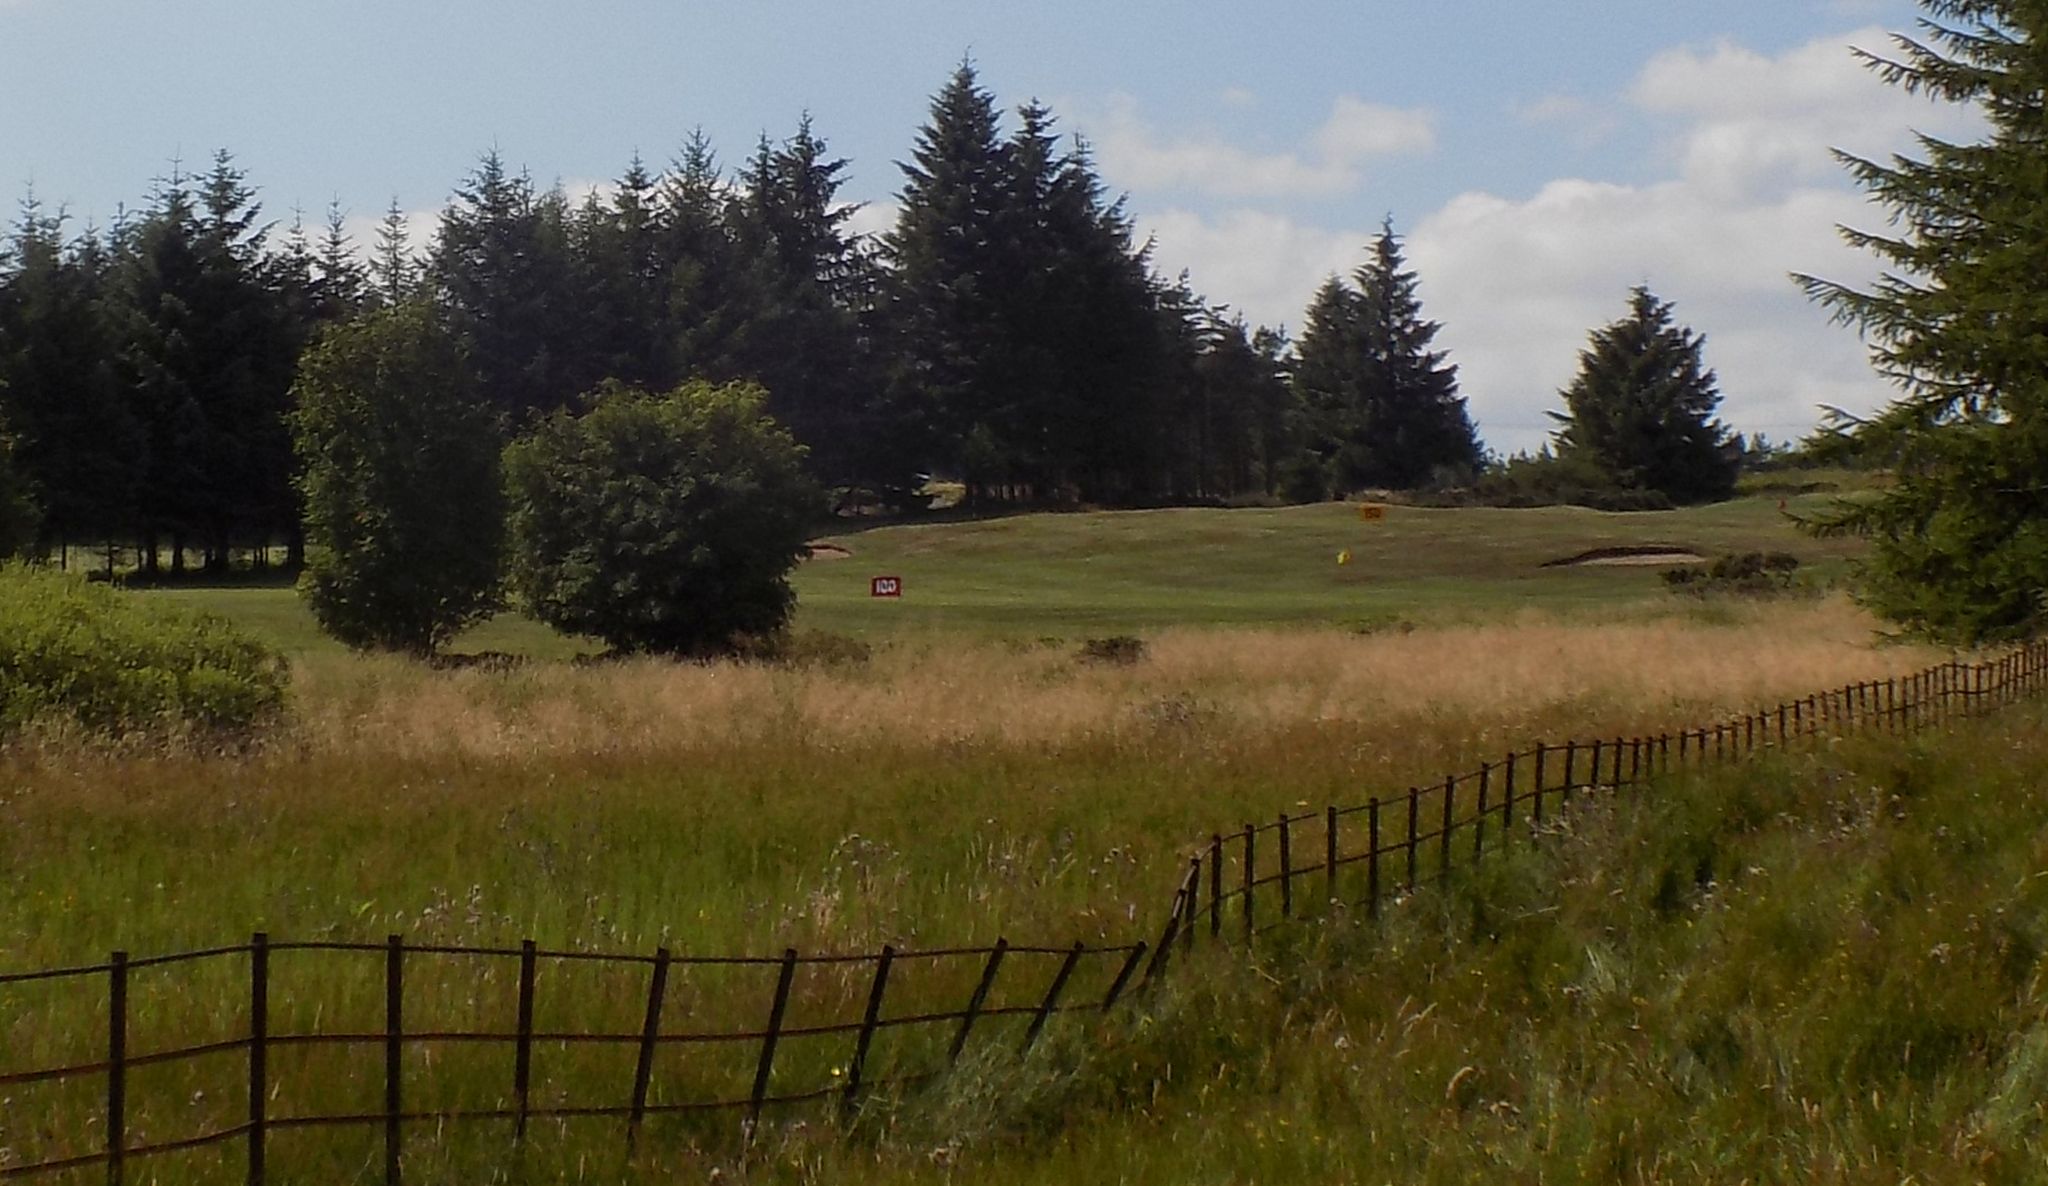 Paisley Golf Course alongside Gleniffer Braes Country Park